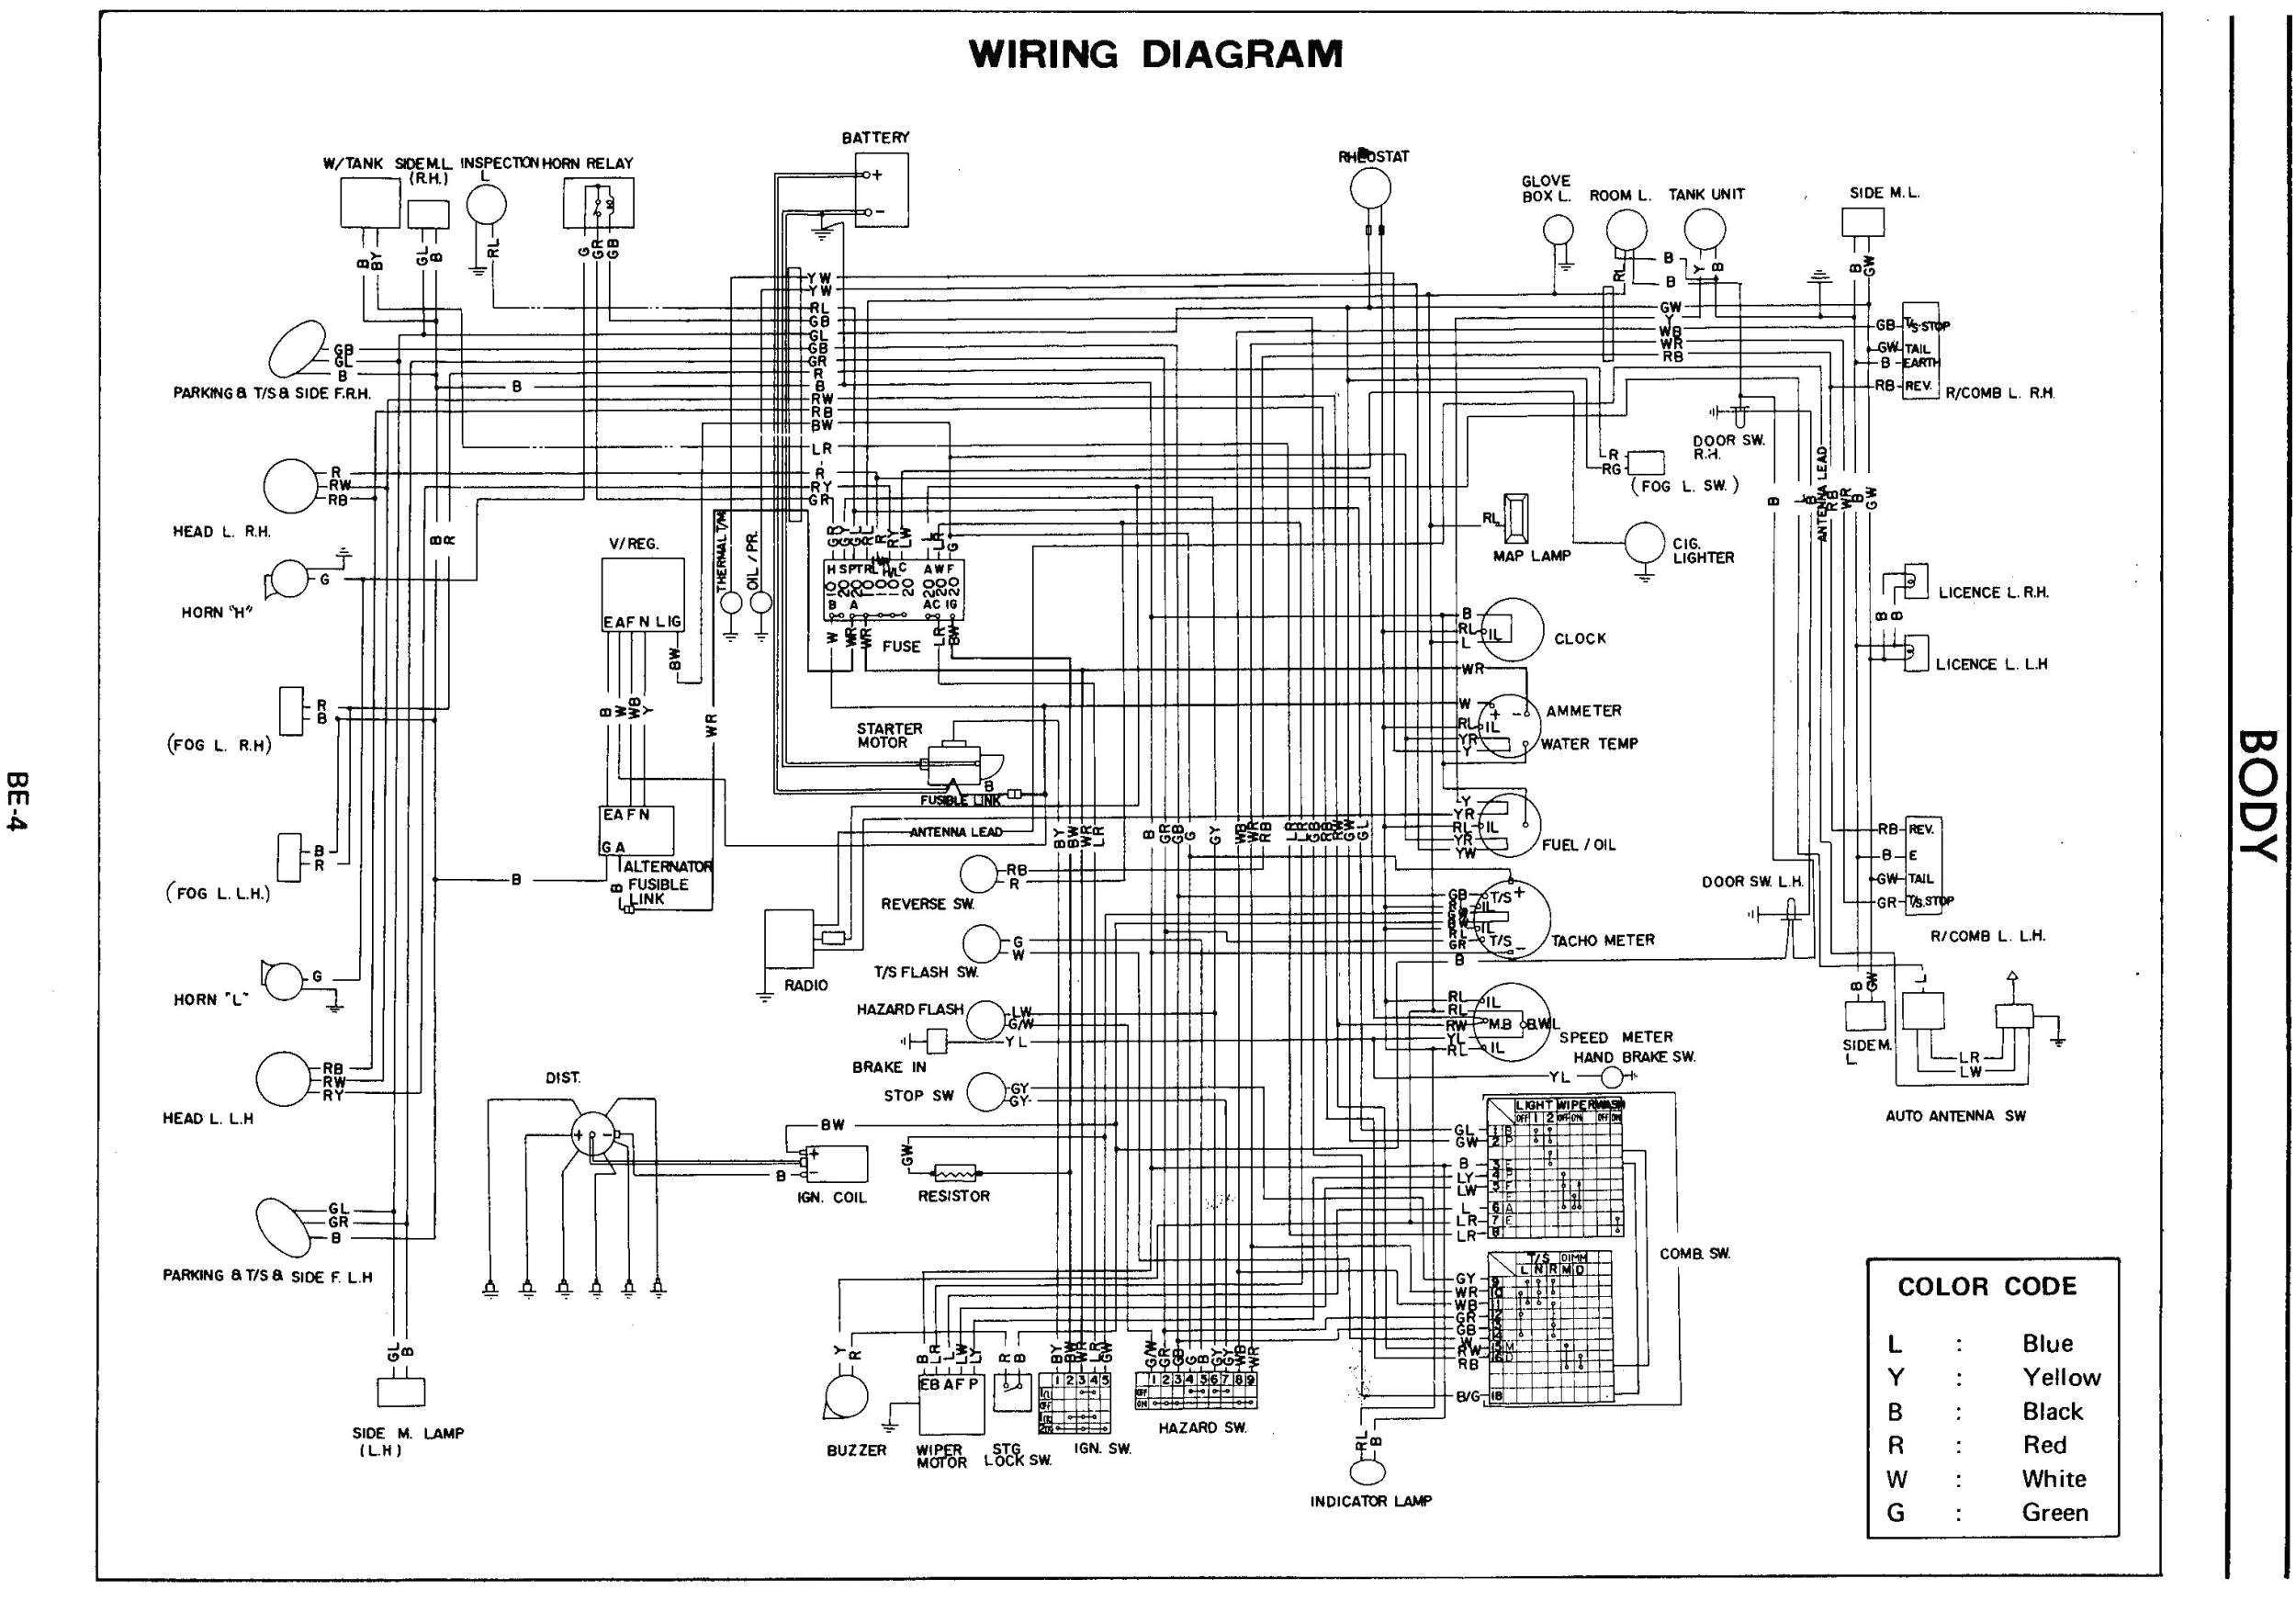 1966 mercedes 230s wiring diagram wiring diagram database 1966 mercedes 230s wiring